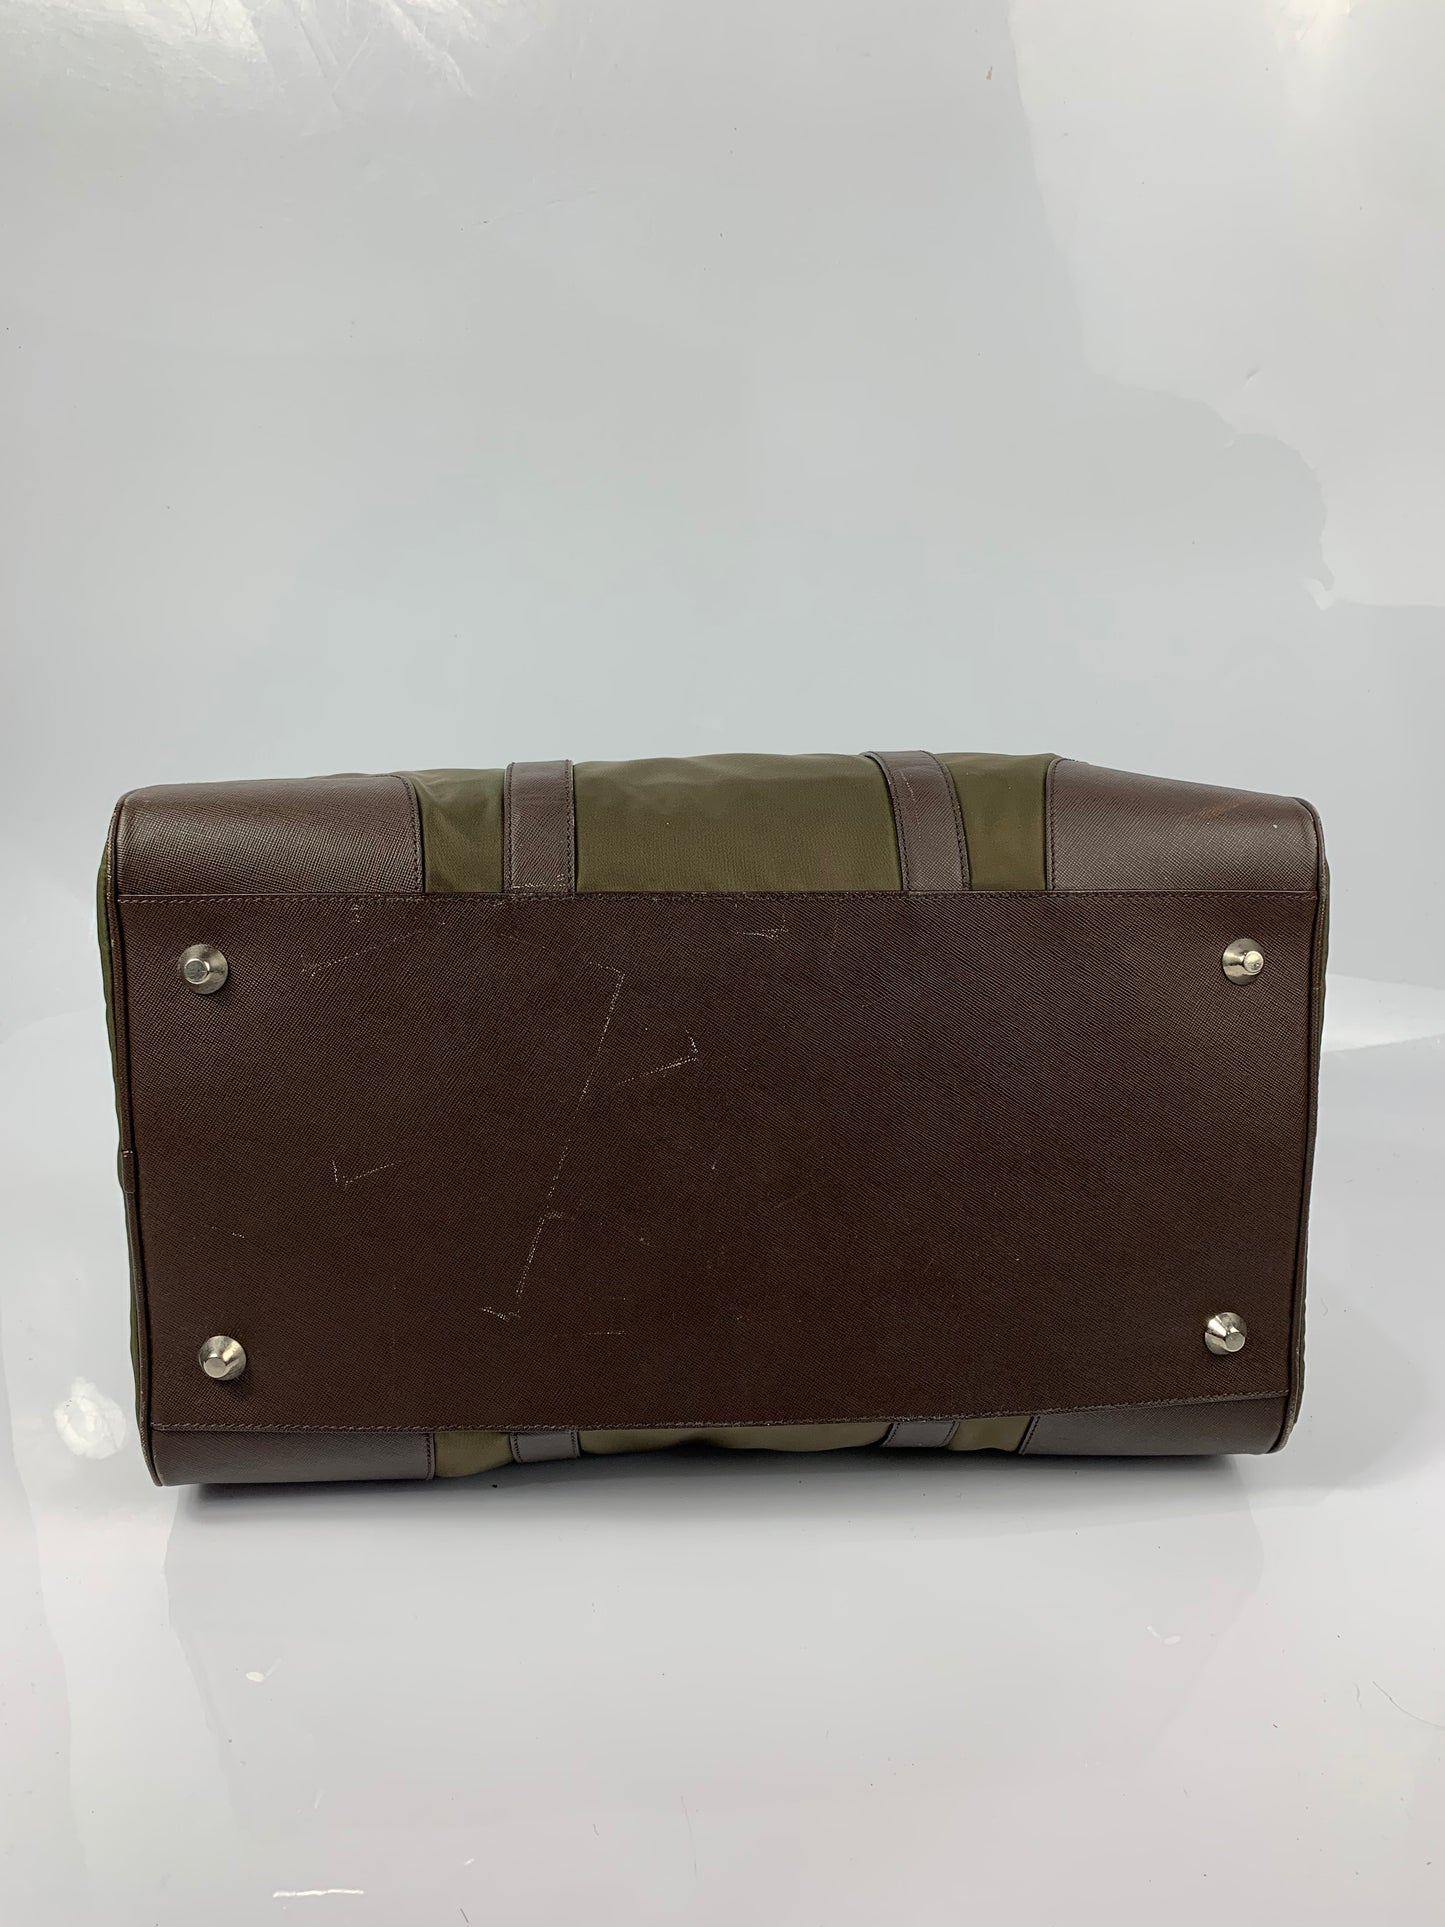 Prada Khaki Green Leather Nylon Saffiano Duffle Bag